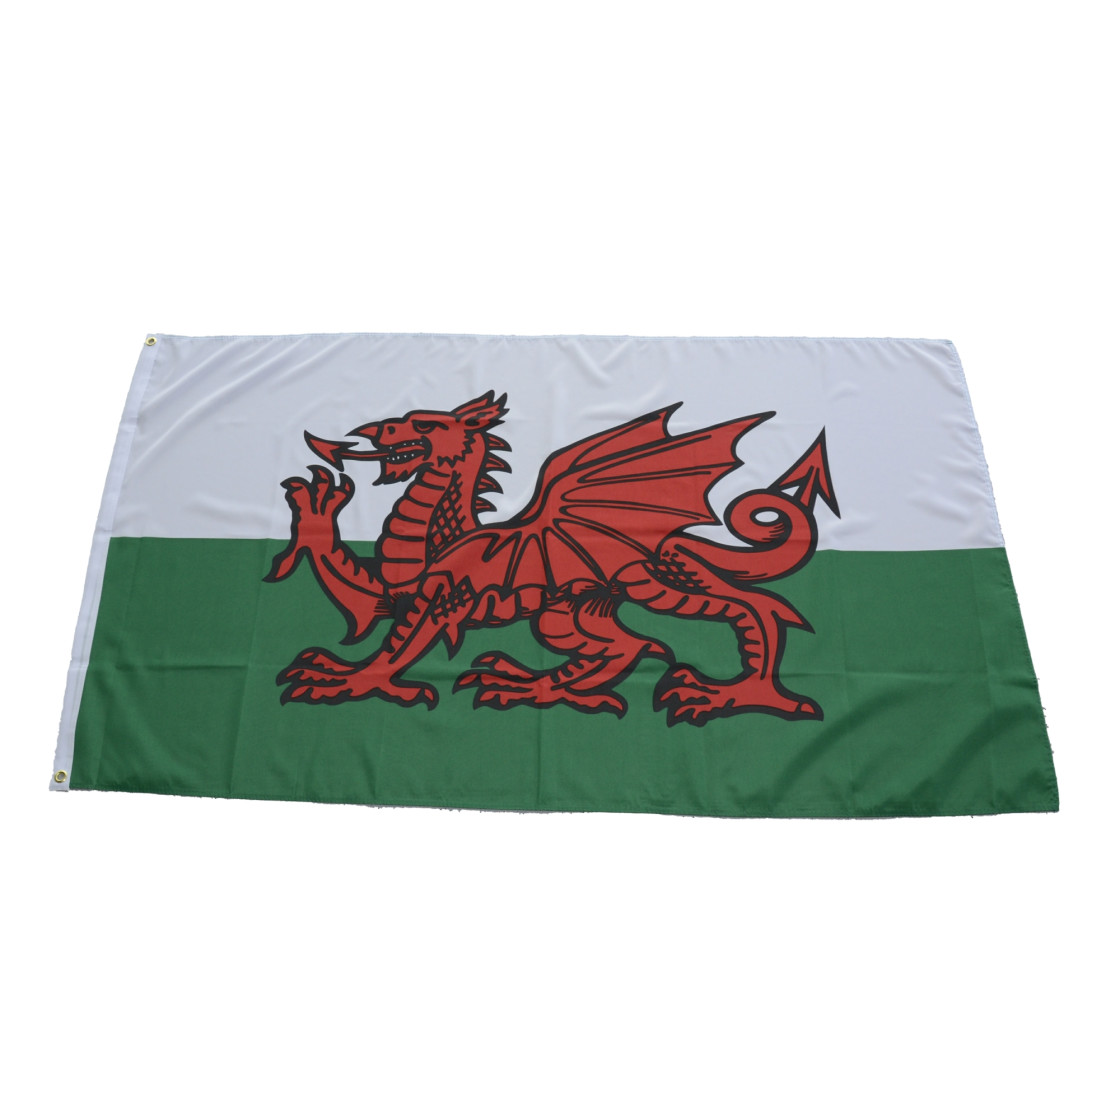 Wales Fahne Flagge Hissflagge Nationalfahne mit Ösen ca 150x90 cm 